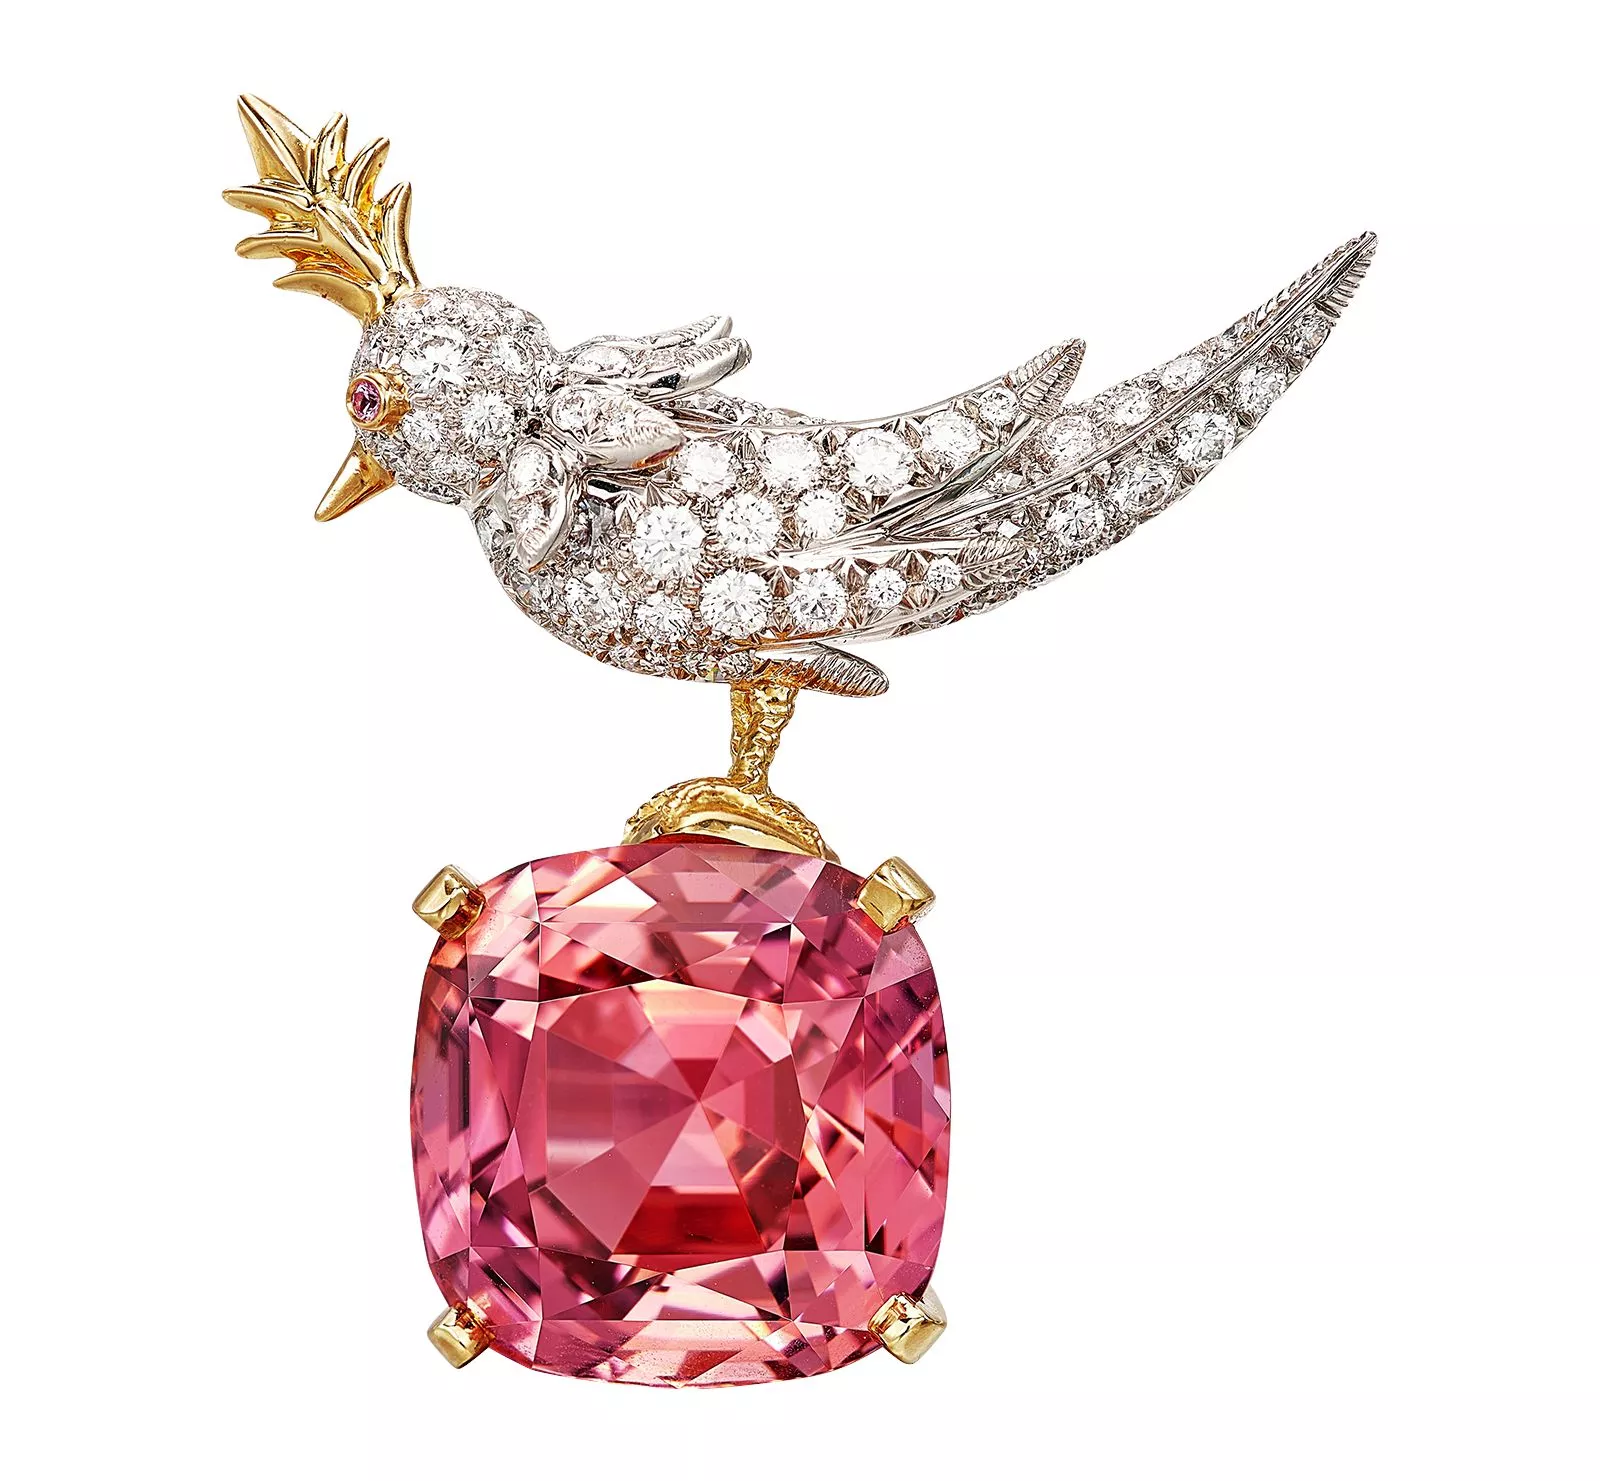 Tiffany & Co., брошь «Bird on a Rock» («Птица на скале»)